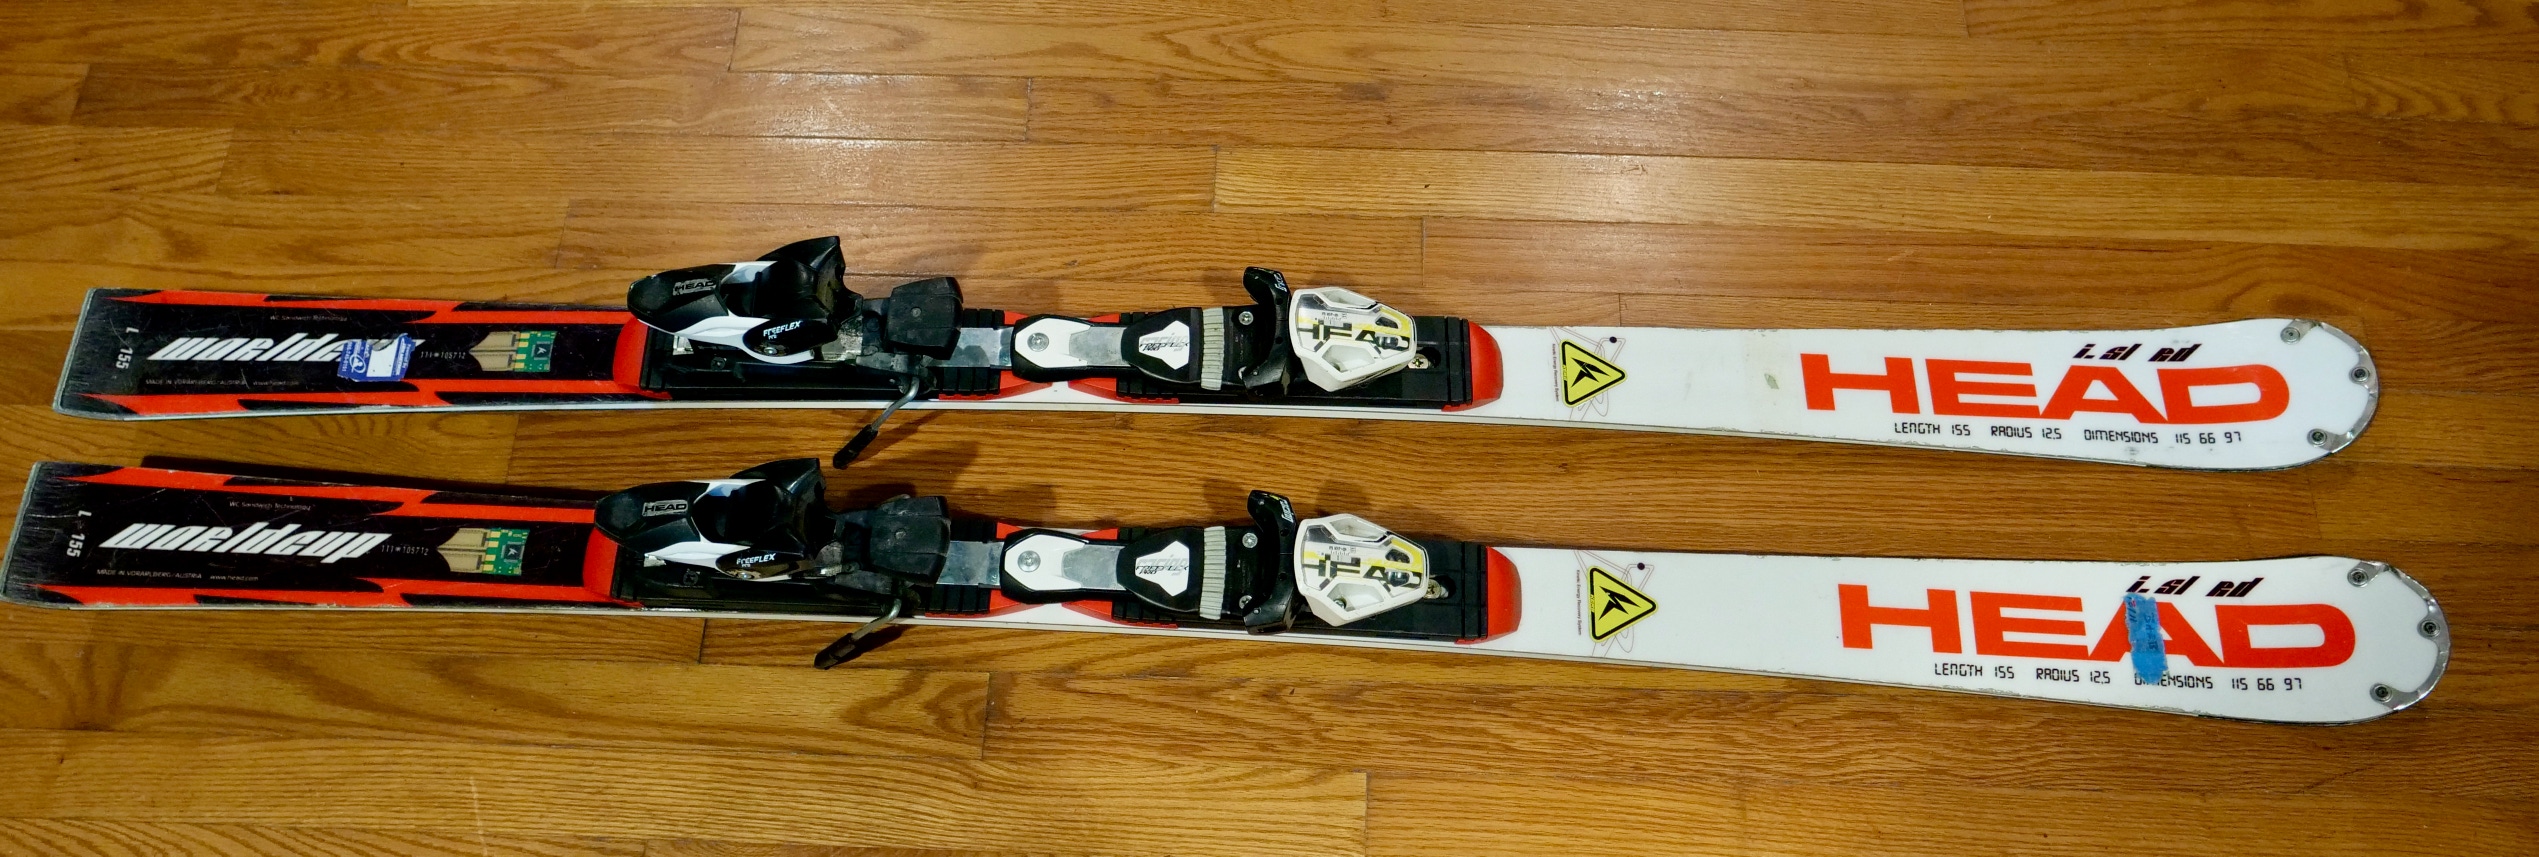 HEAD 155 cm Racing i.SL RD Skis With Bindings Max Din 11 Used